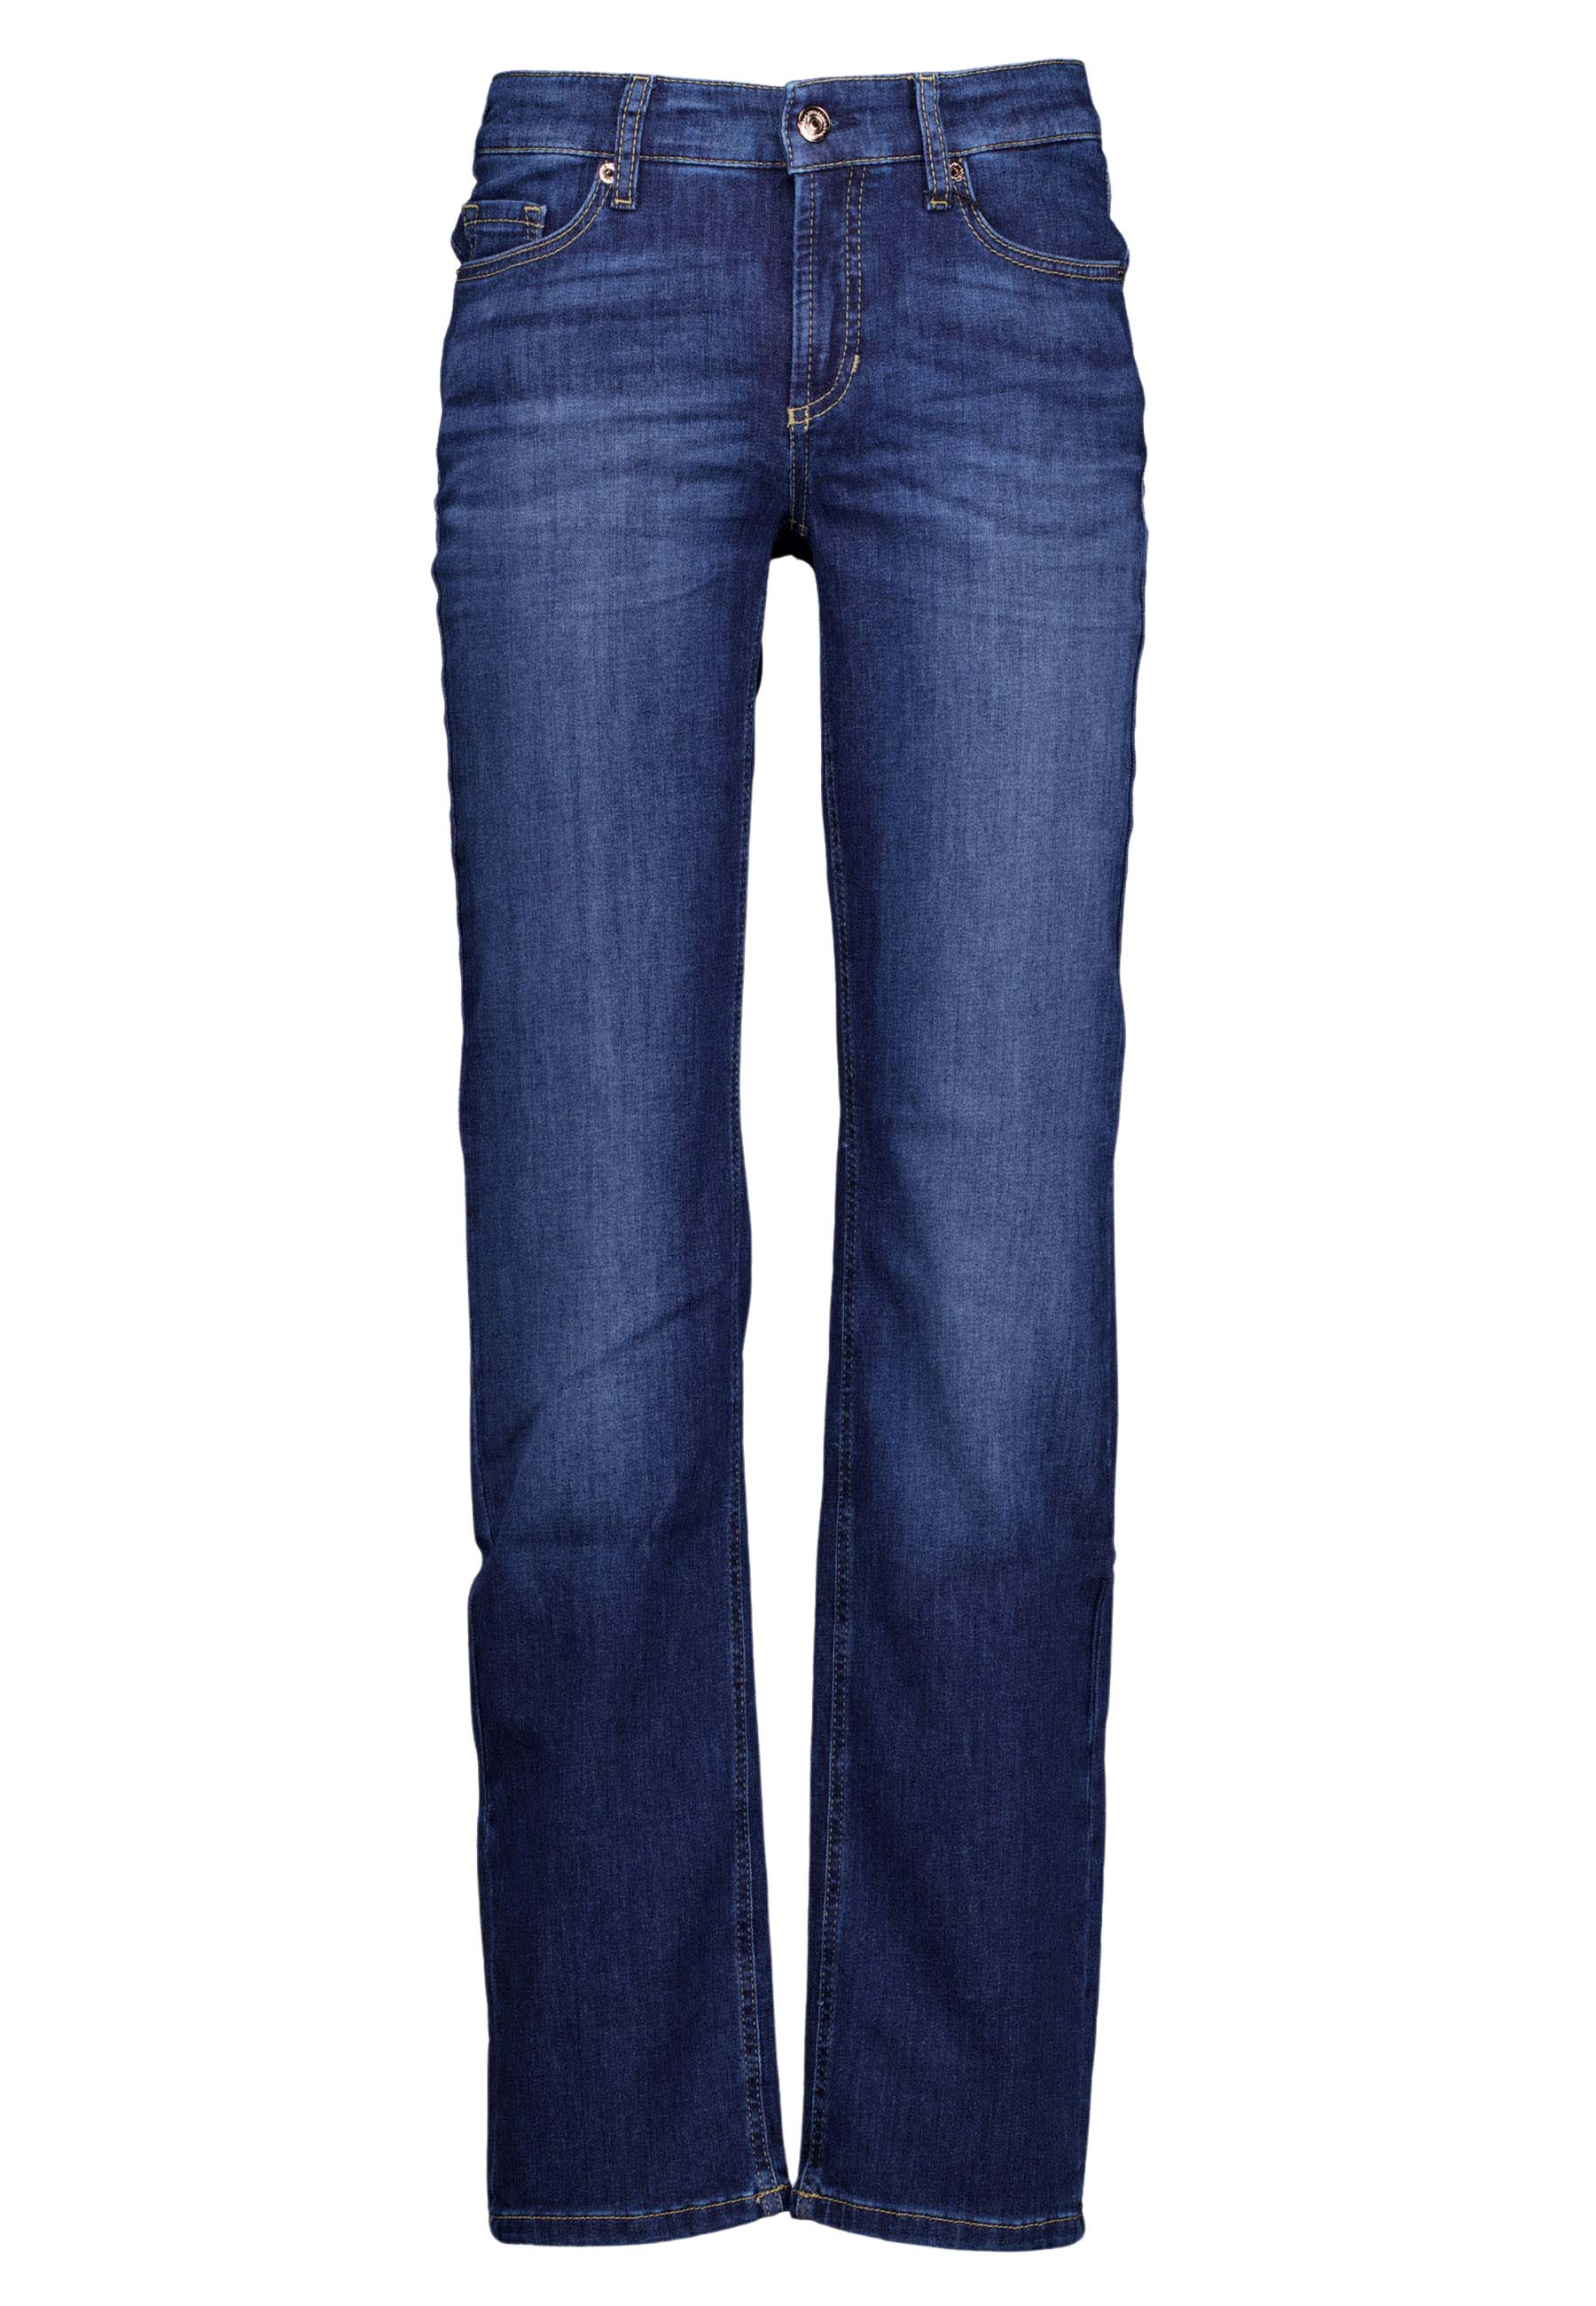 Cambio jeans blauw Dames maat 34